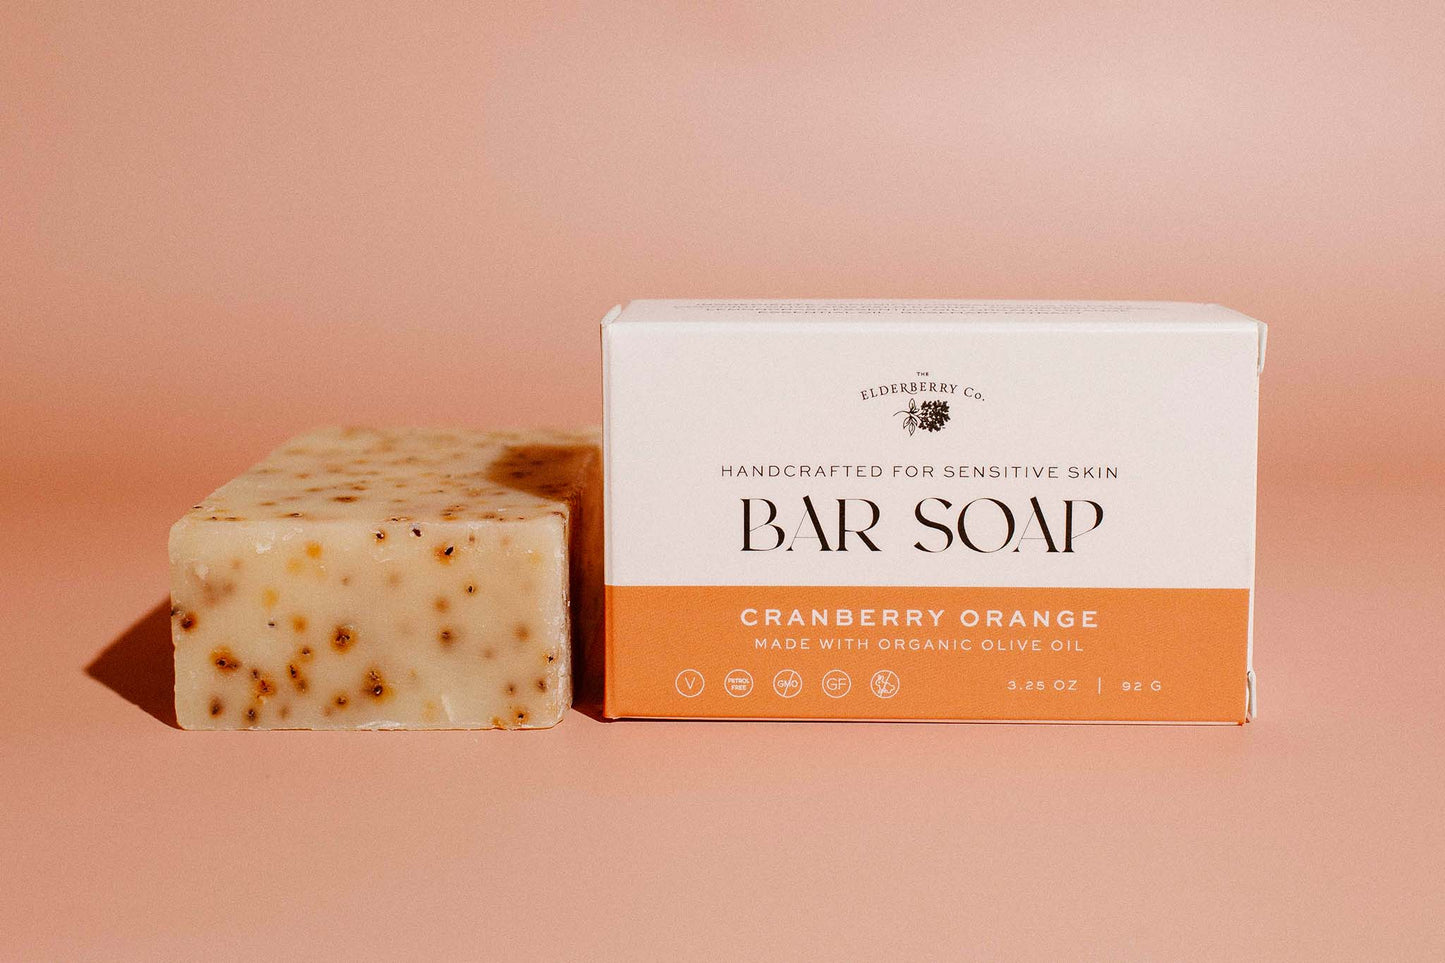 Cranberry Orange Bar Soap